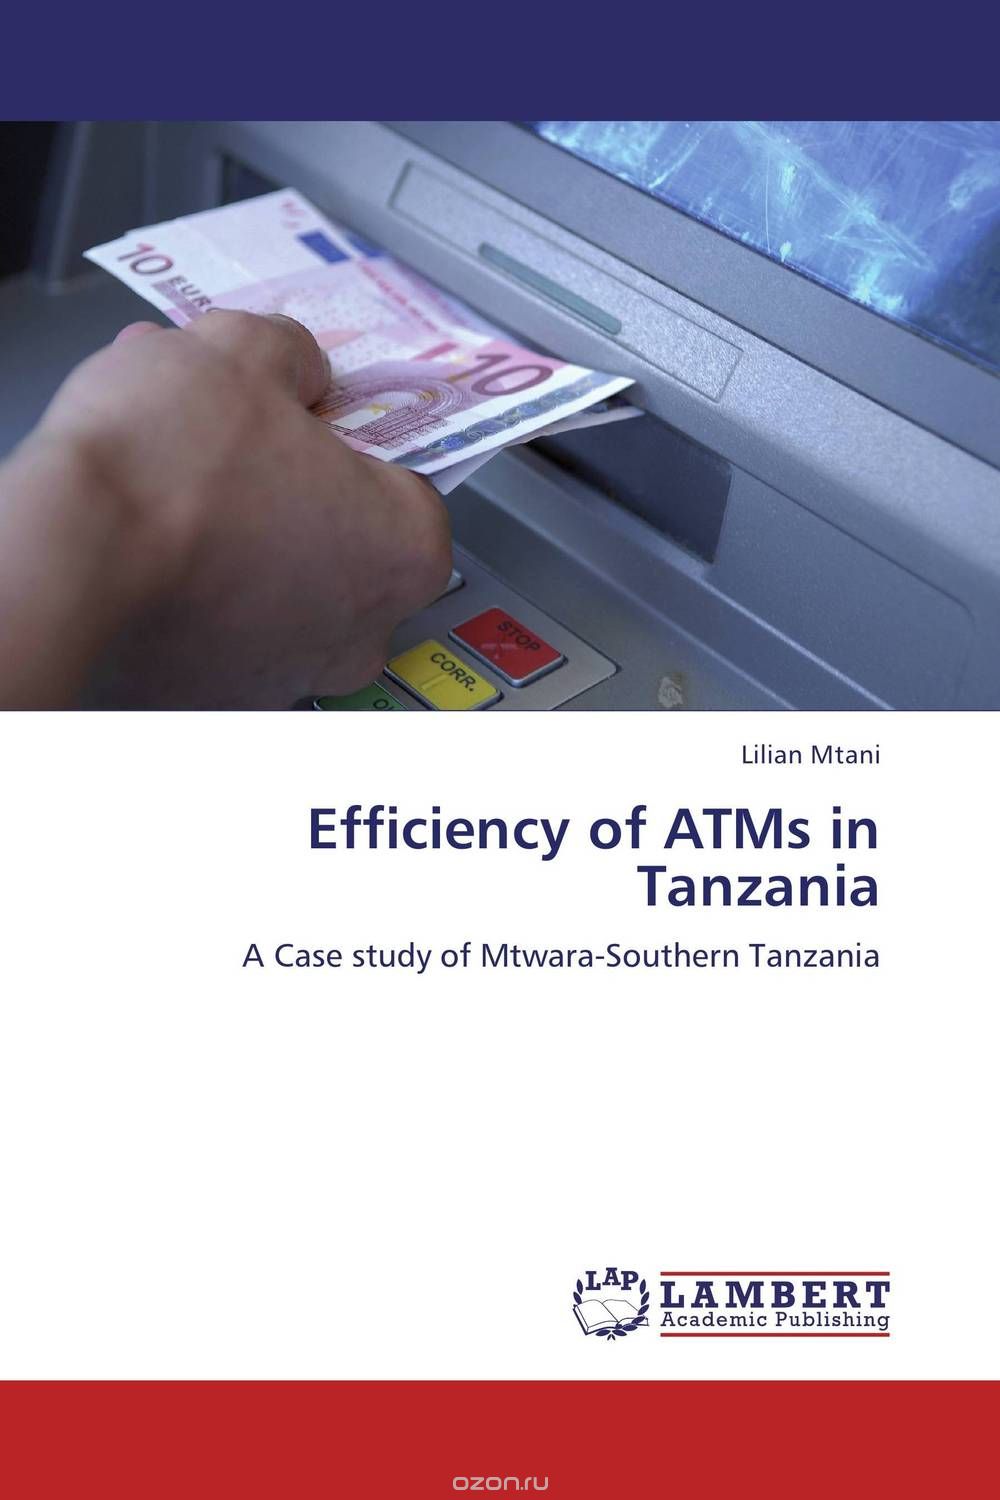 Скачать книгу "Efficiency of ATMs in Tanzania"